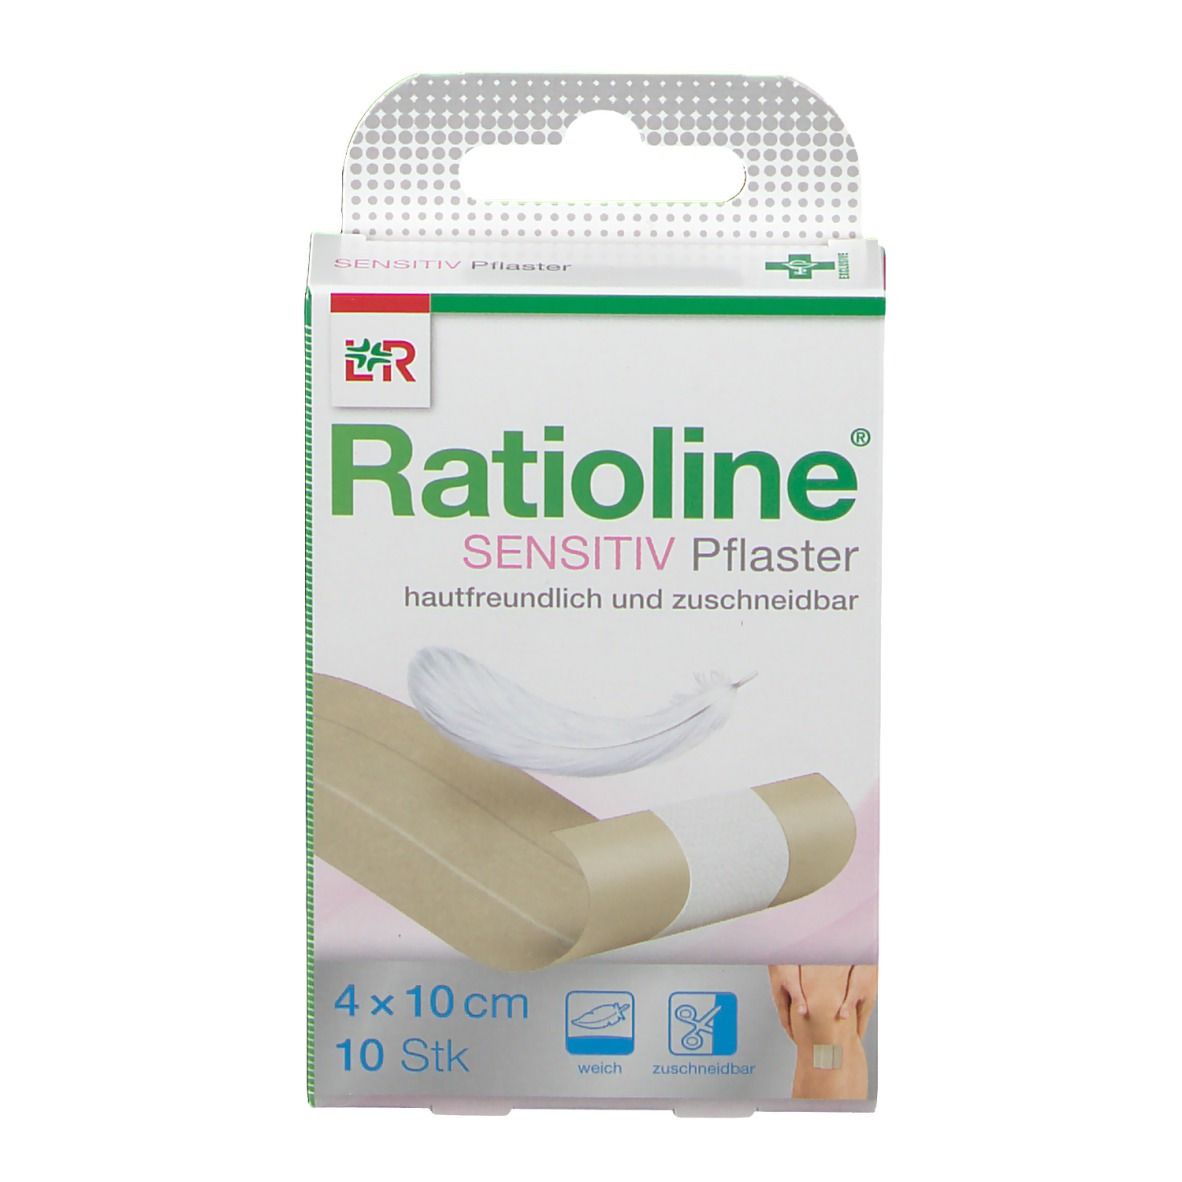 Ratioline® sensitive Wundschnellverband 4 cm x 10 cm